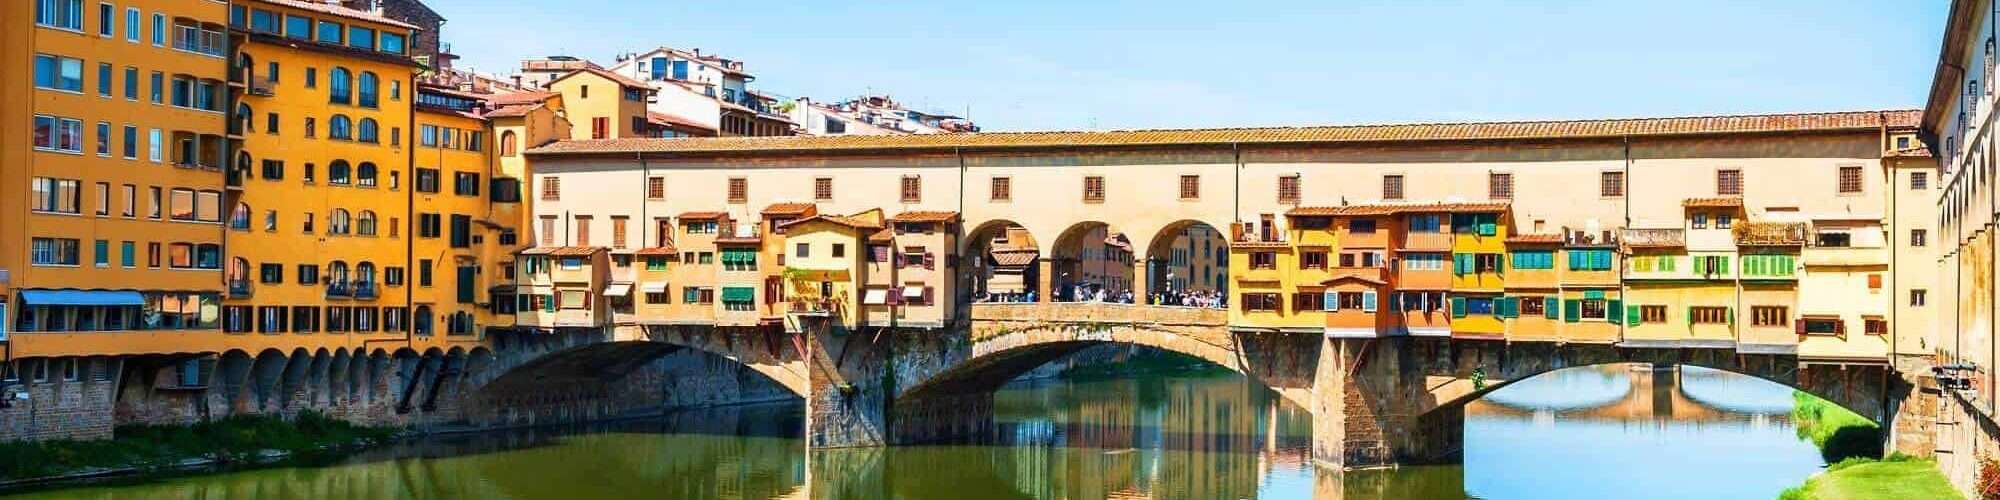 Ponte-Vecchio-Florence-Italie